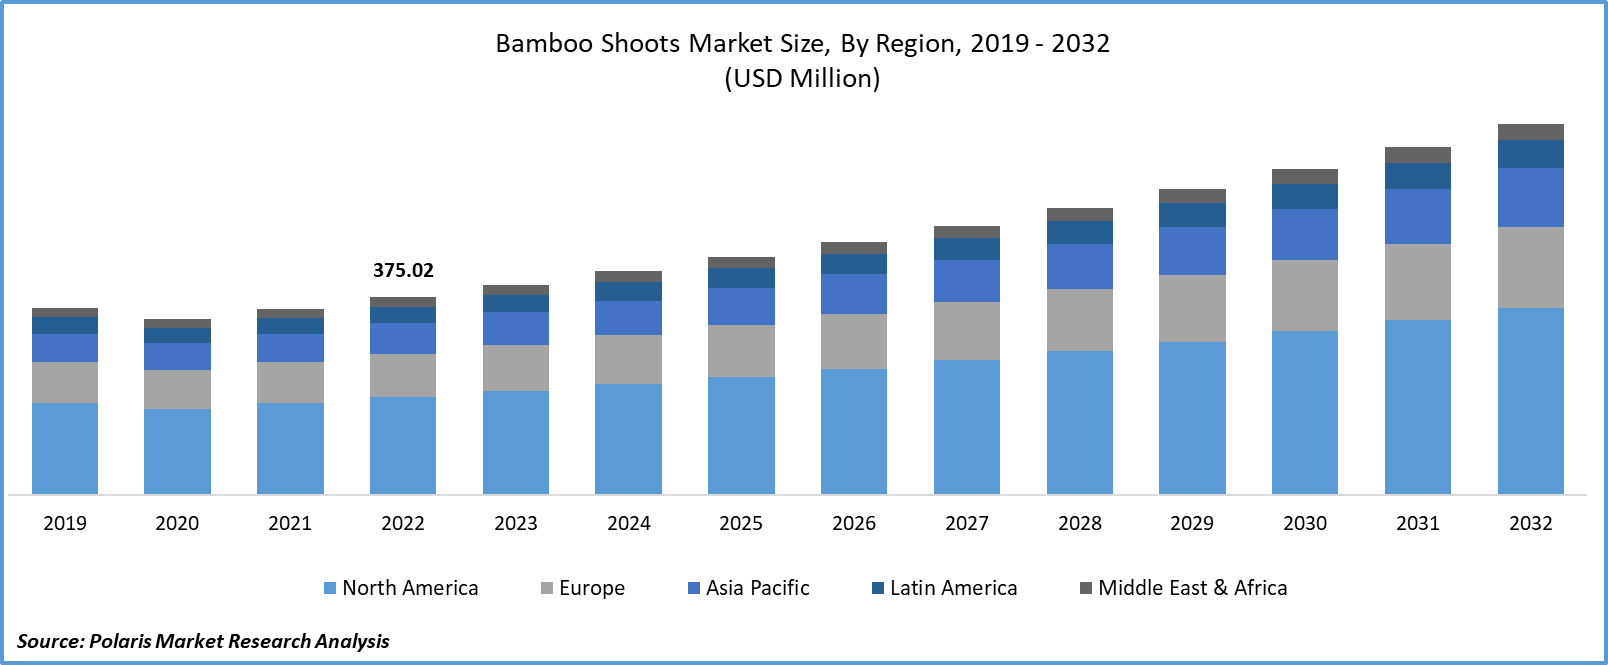 Bamboo Shoots Market Size